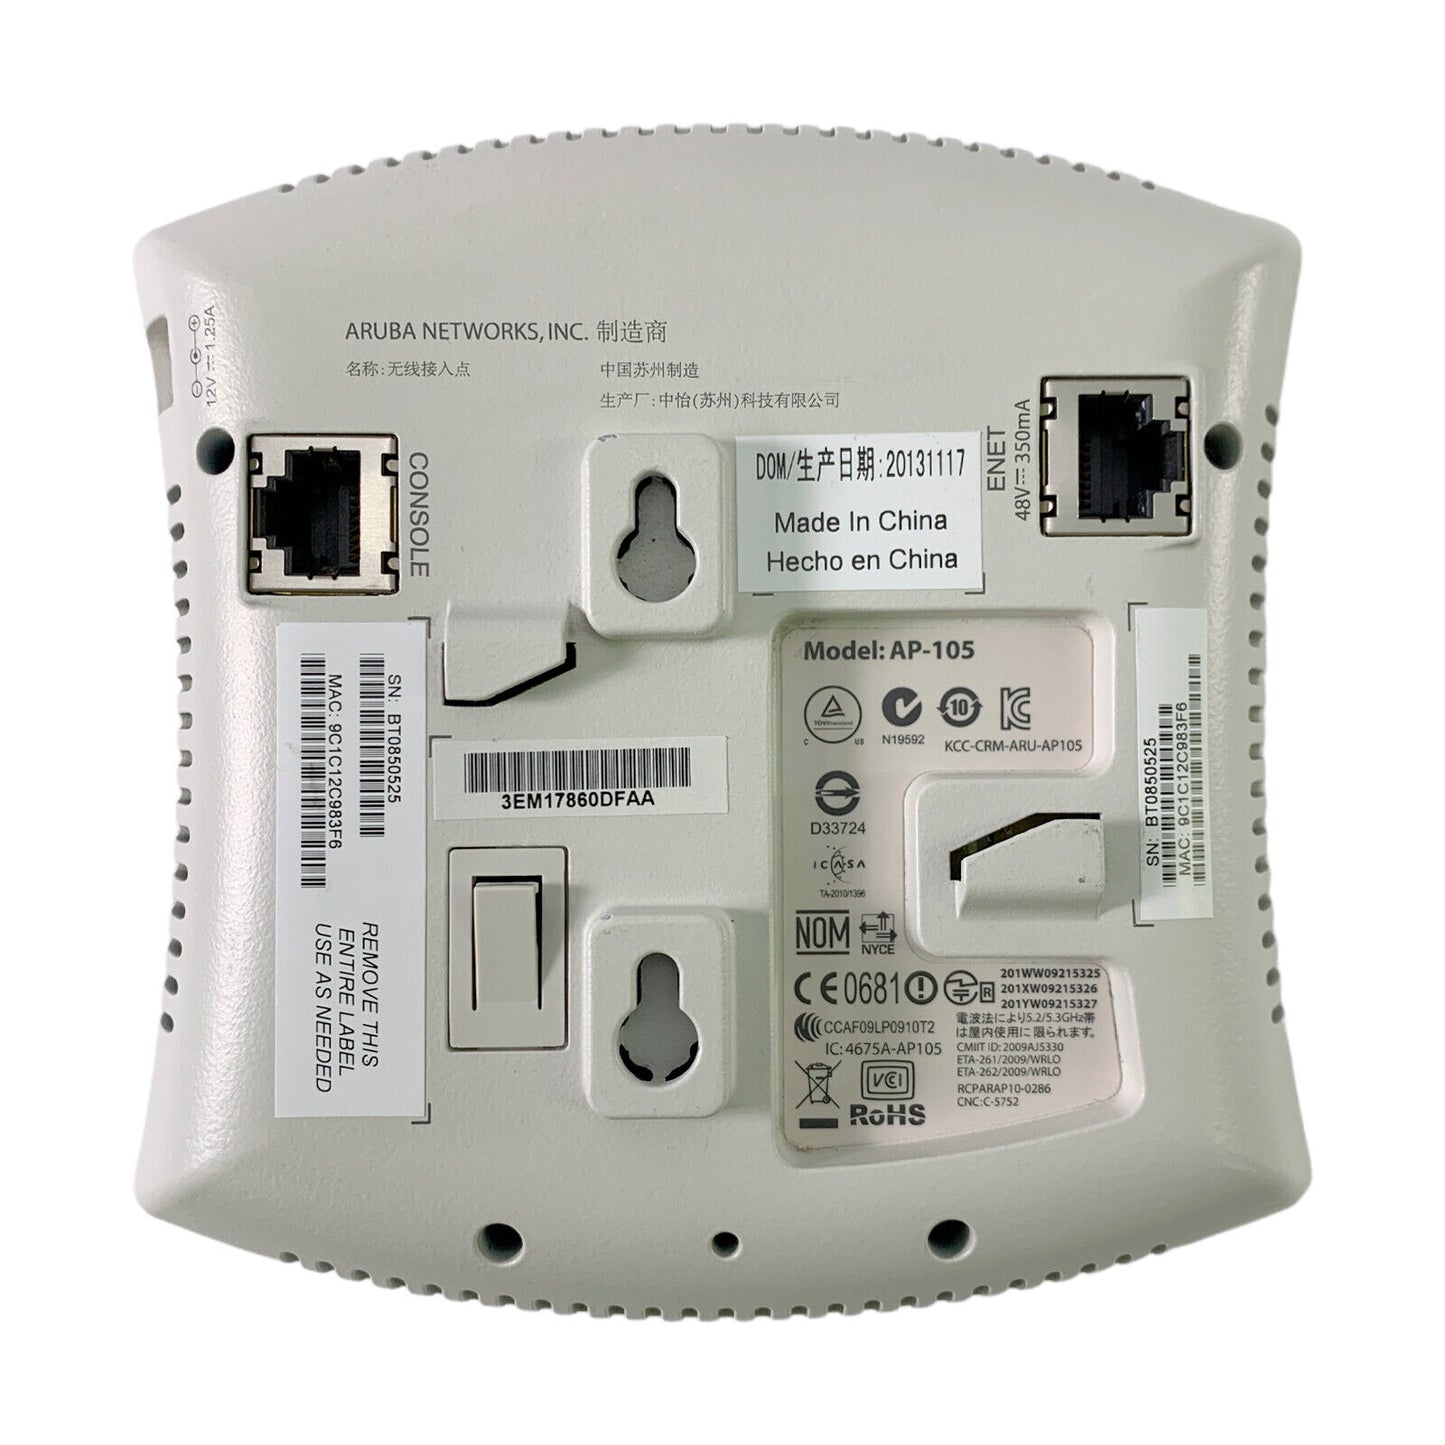 Lot of 25 Aruba Networks AP-105 2.4 GHz 5 GHz Wireless Access Point